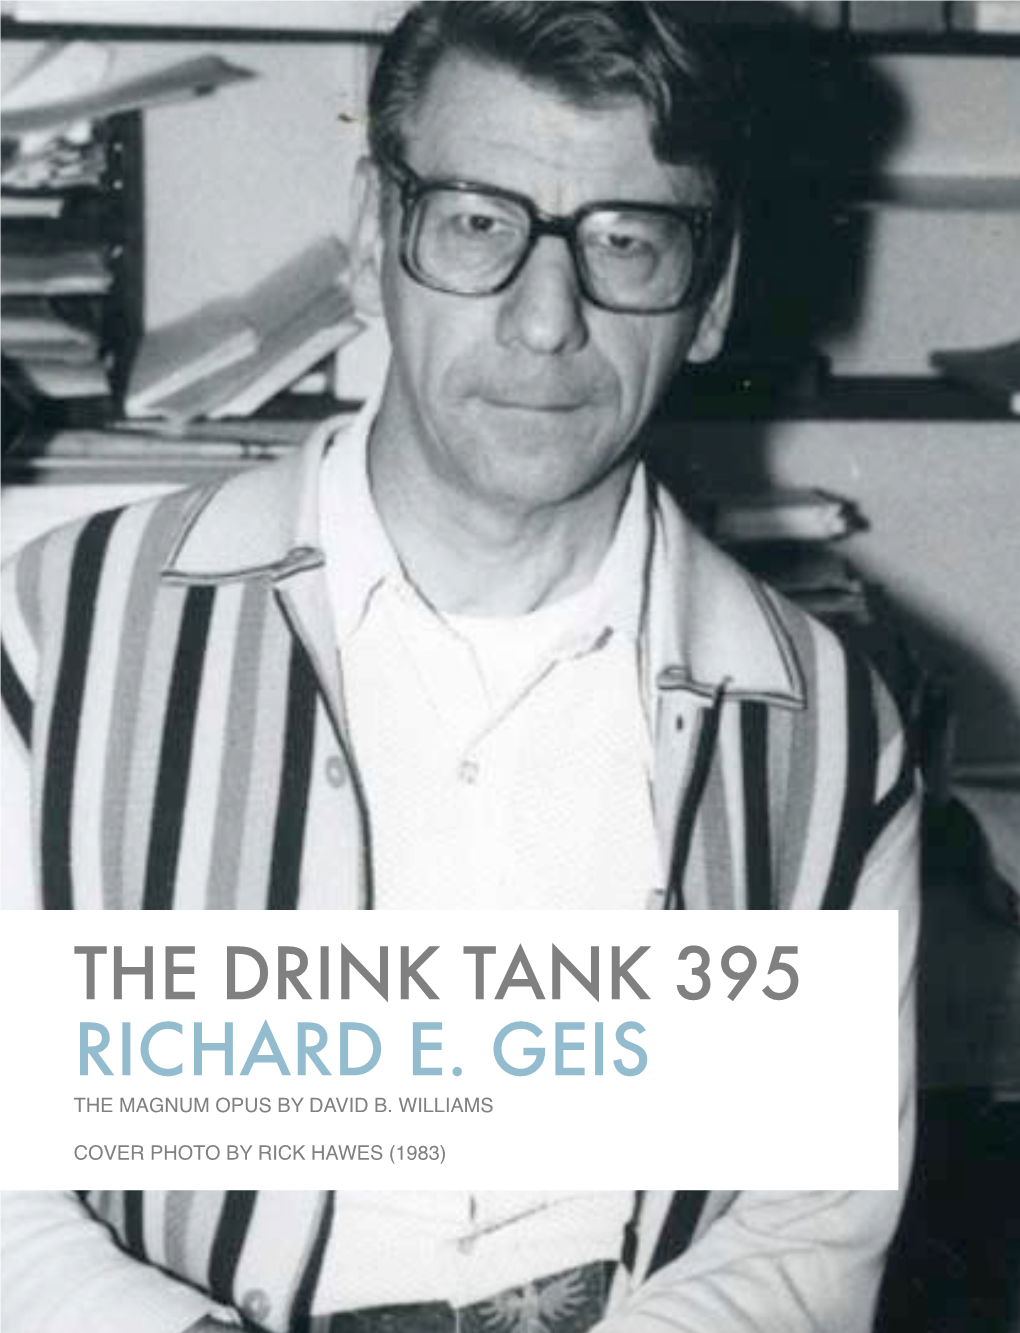 The Drink Tank 395 Richard E. Geis the Magnum Opus by David B